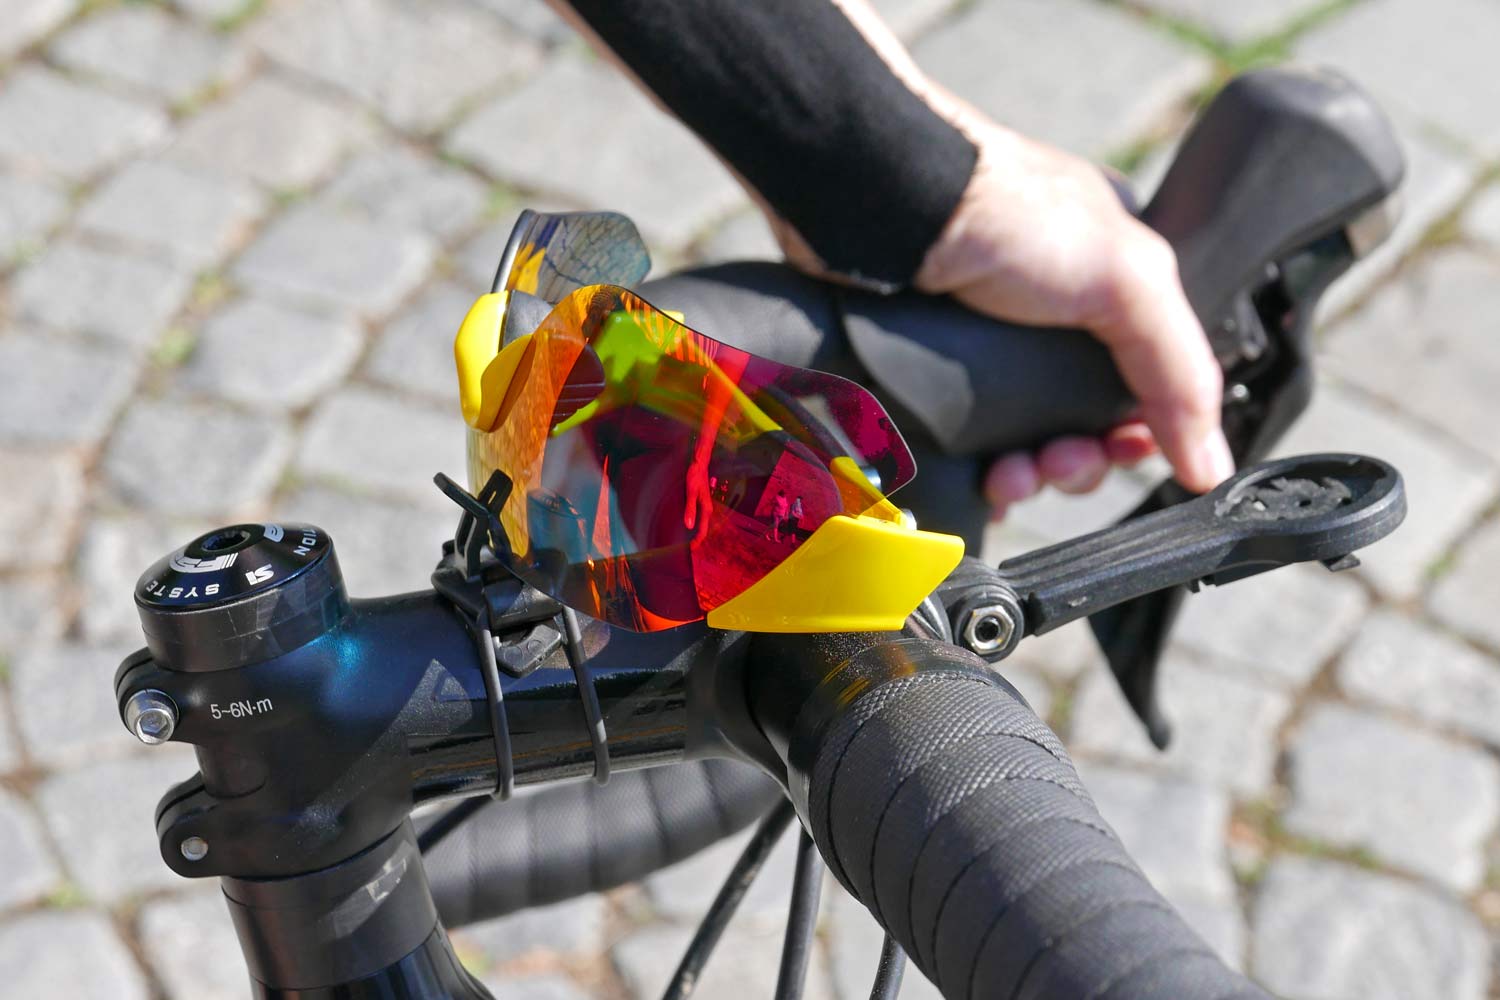 KOO Billy sunglasses mount, clip-on stem-mounted glasses road bike mount